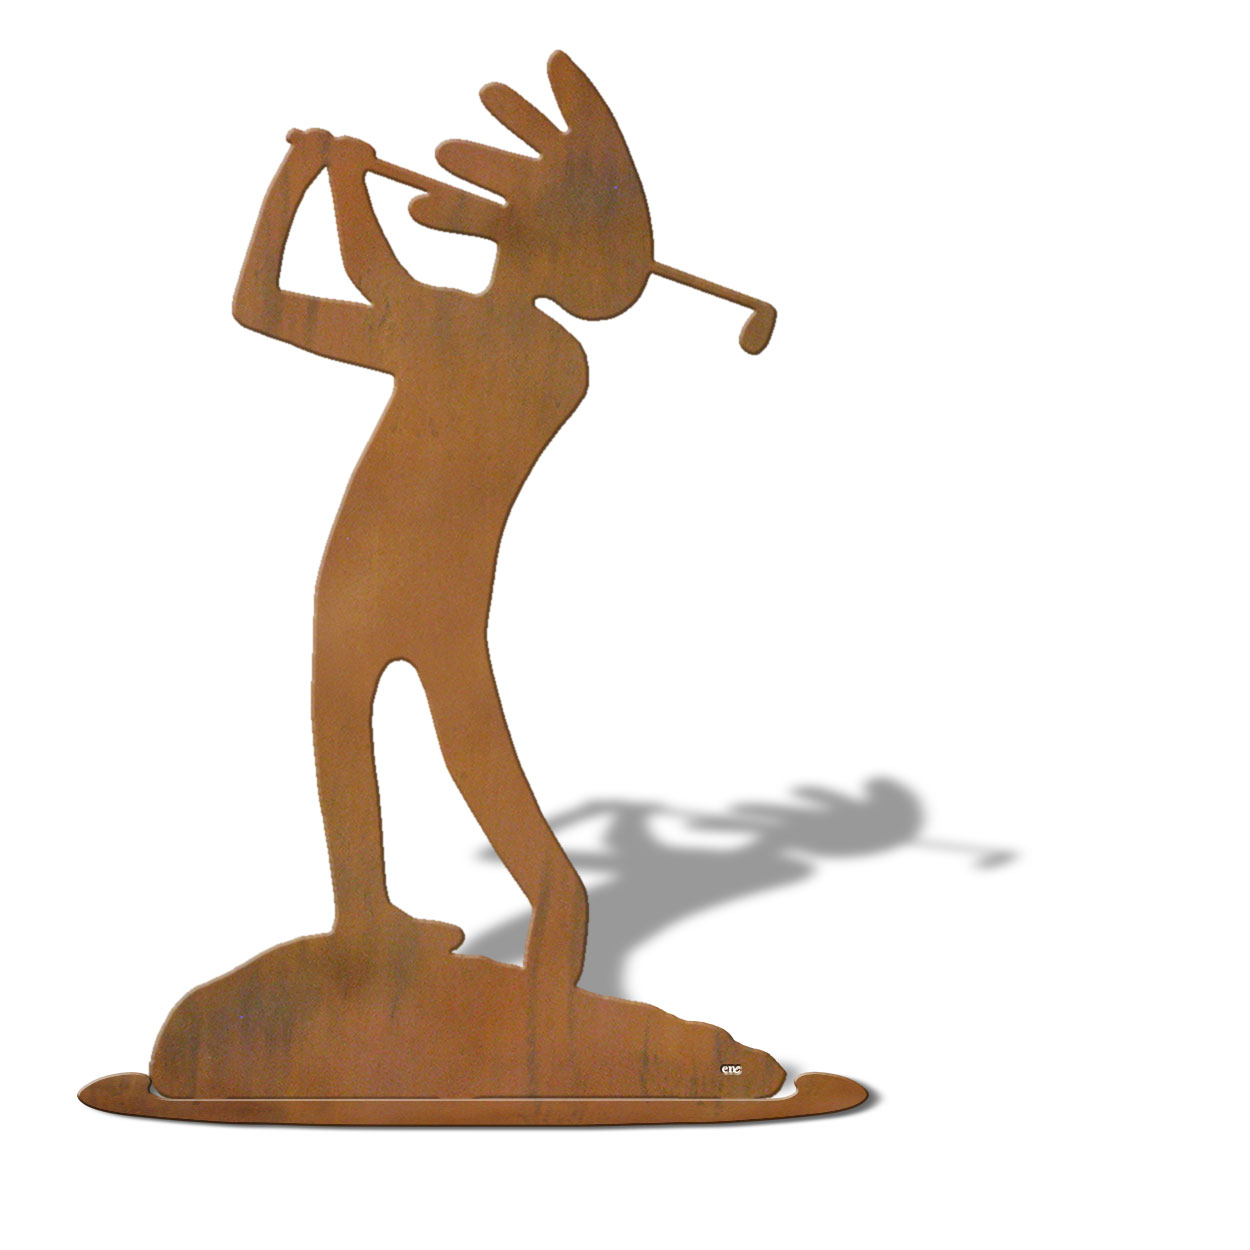 623414r - Tabletop Art - 11in x 18in - Kokopelli Golfer - Rust Patina